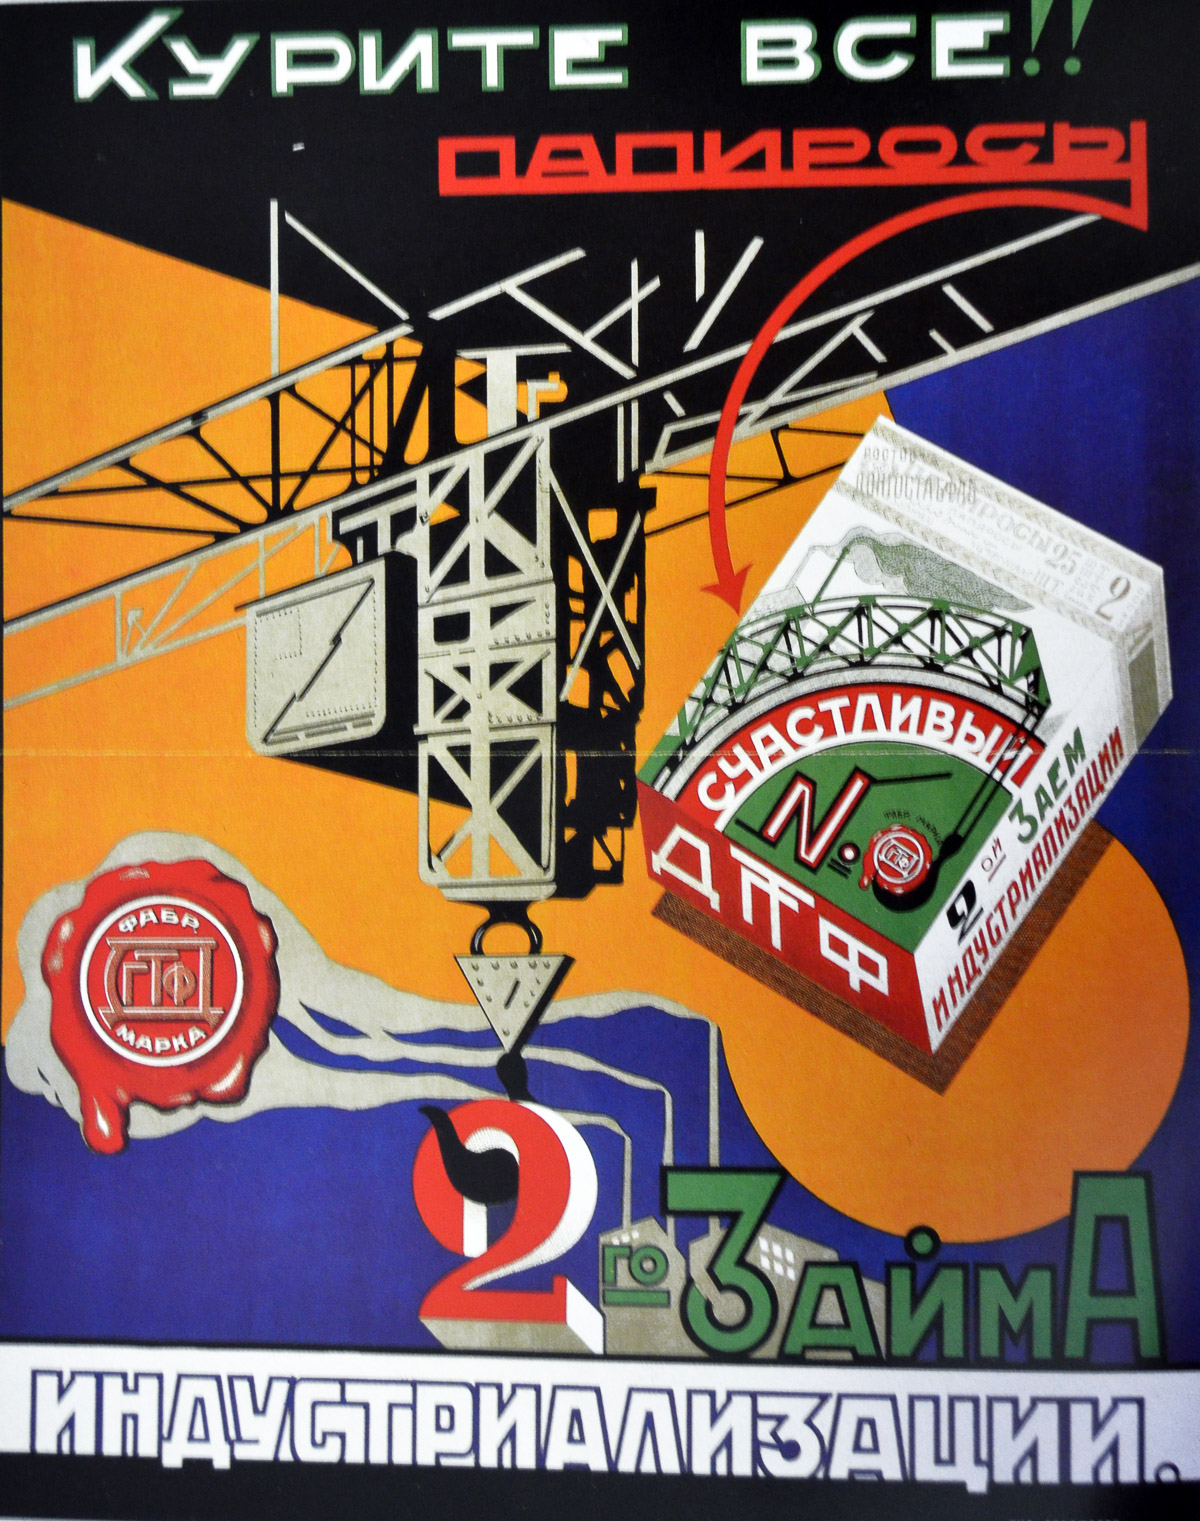 Sovetskaya reklama sigaret 15